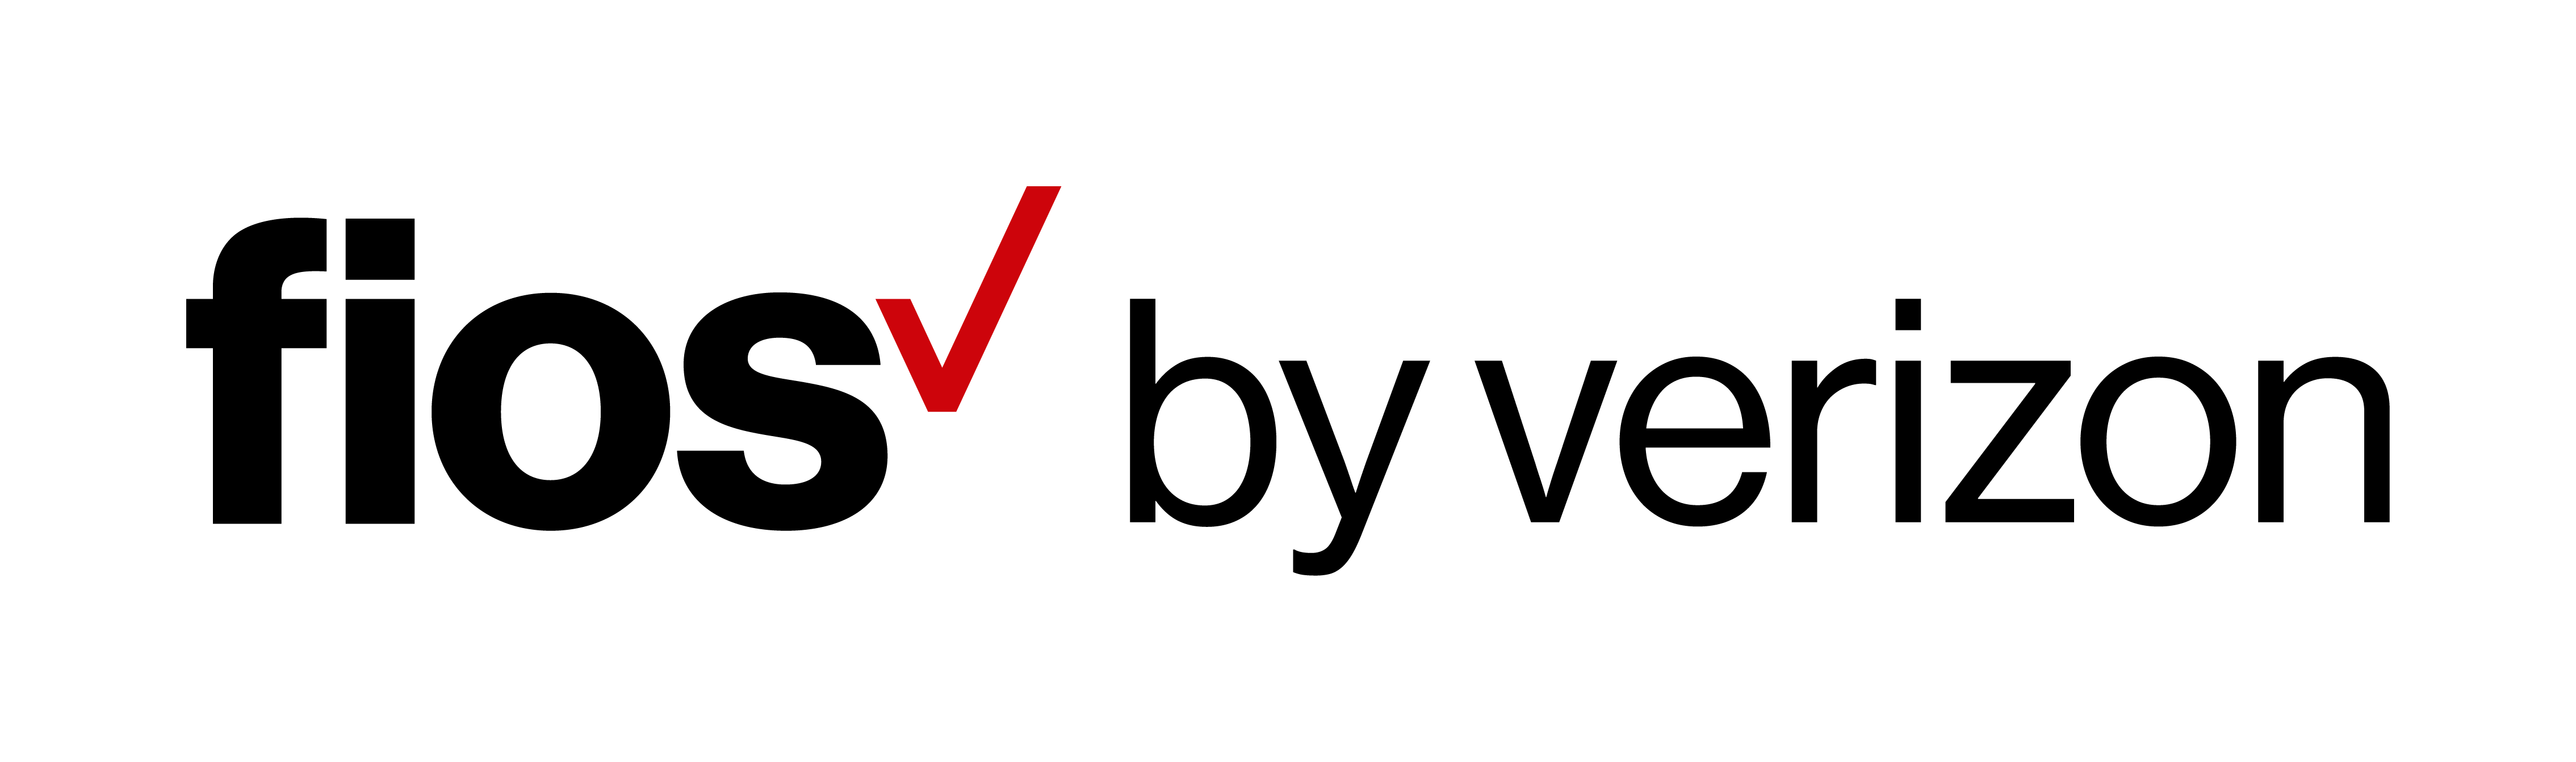 Verizon FiOS Logo - Media Resources